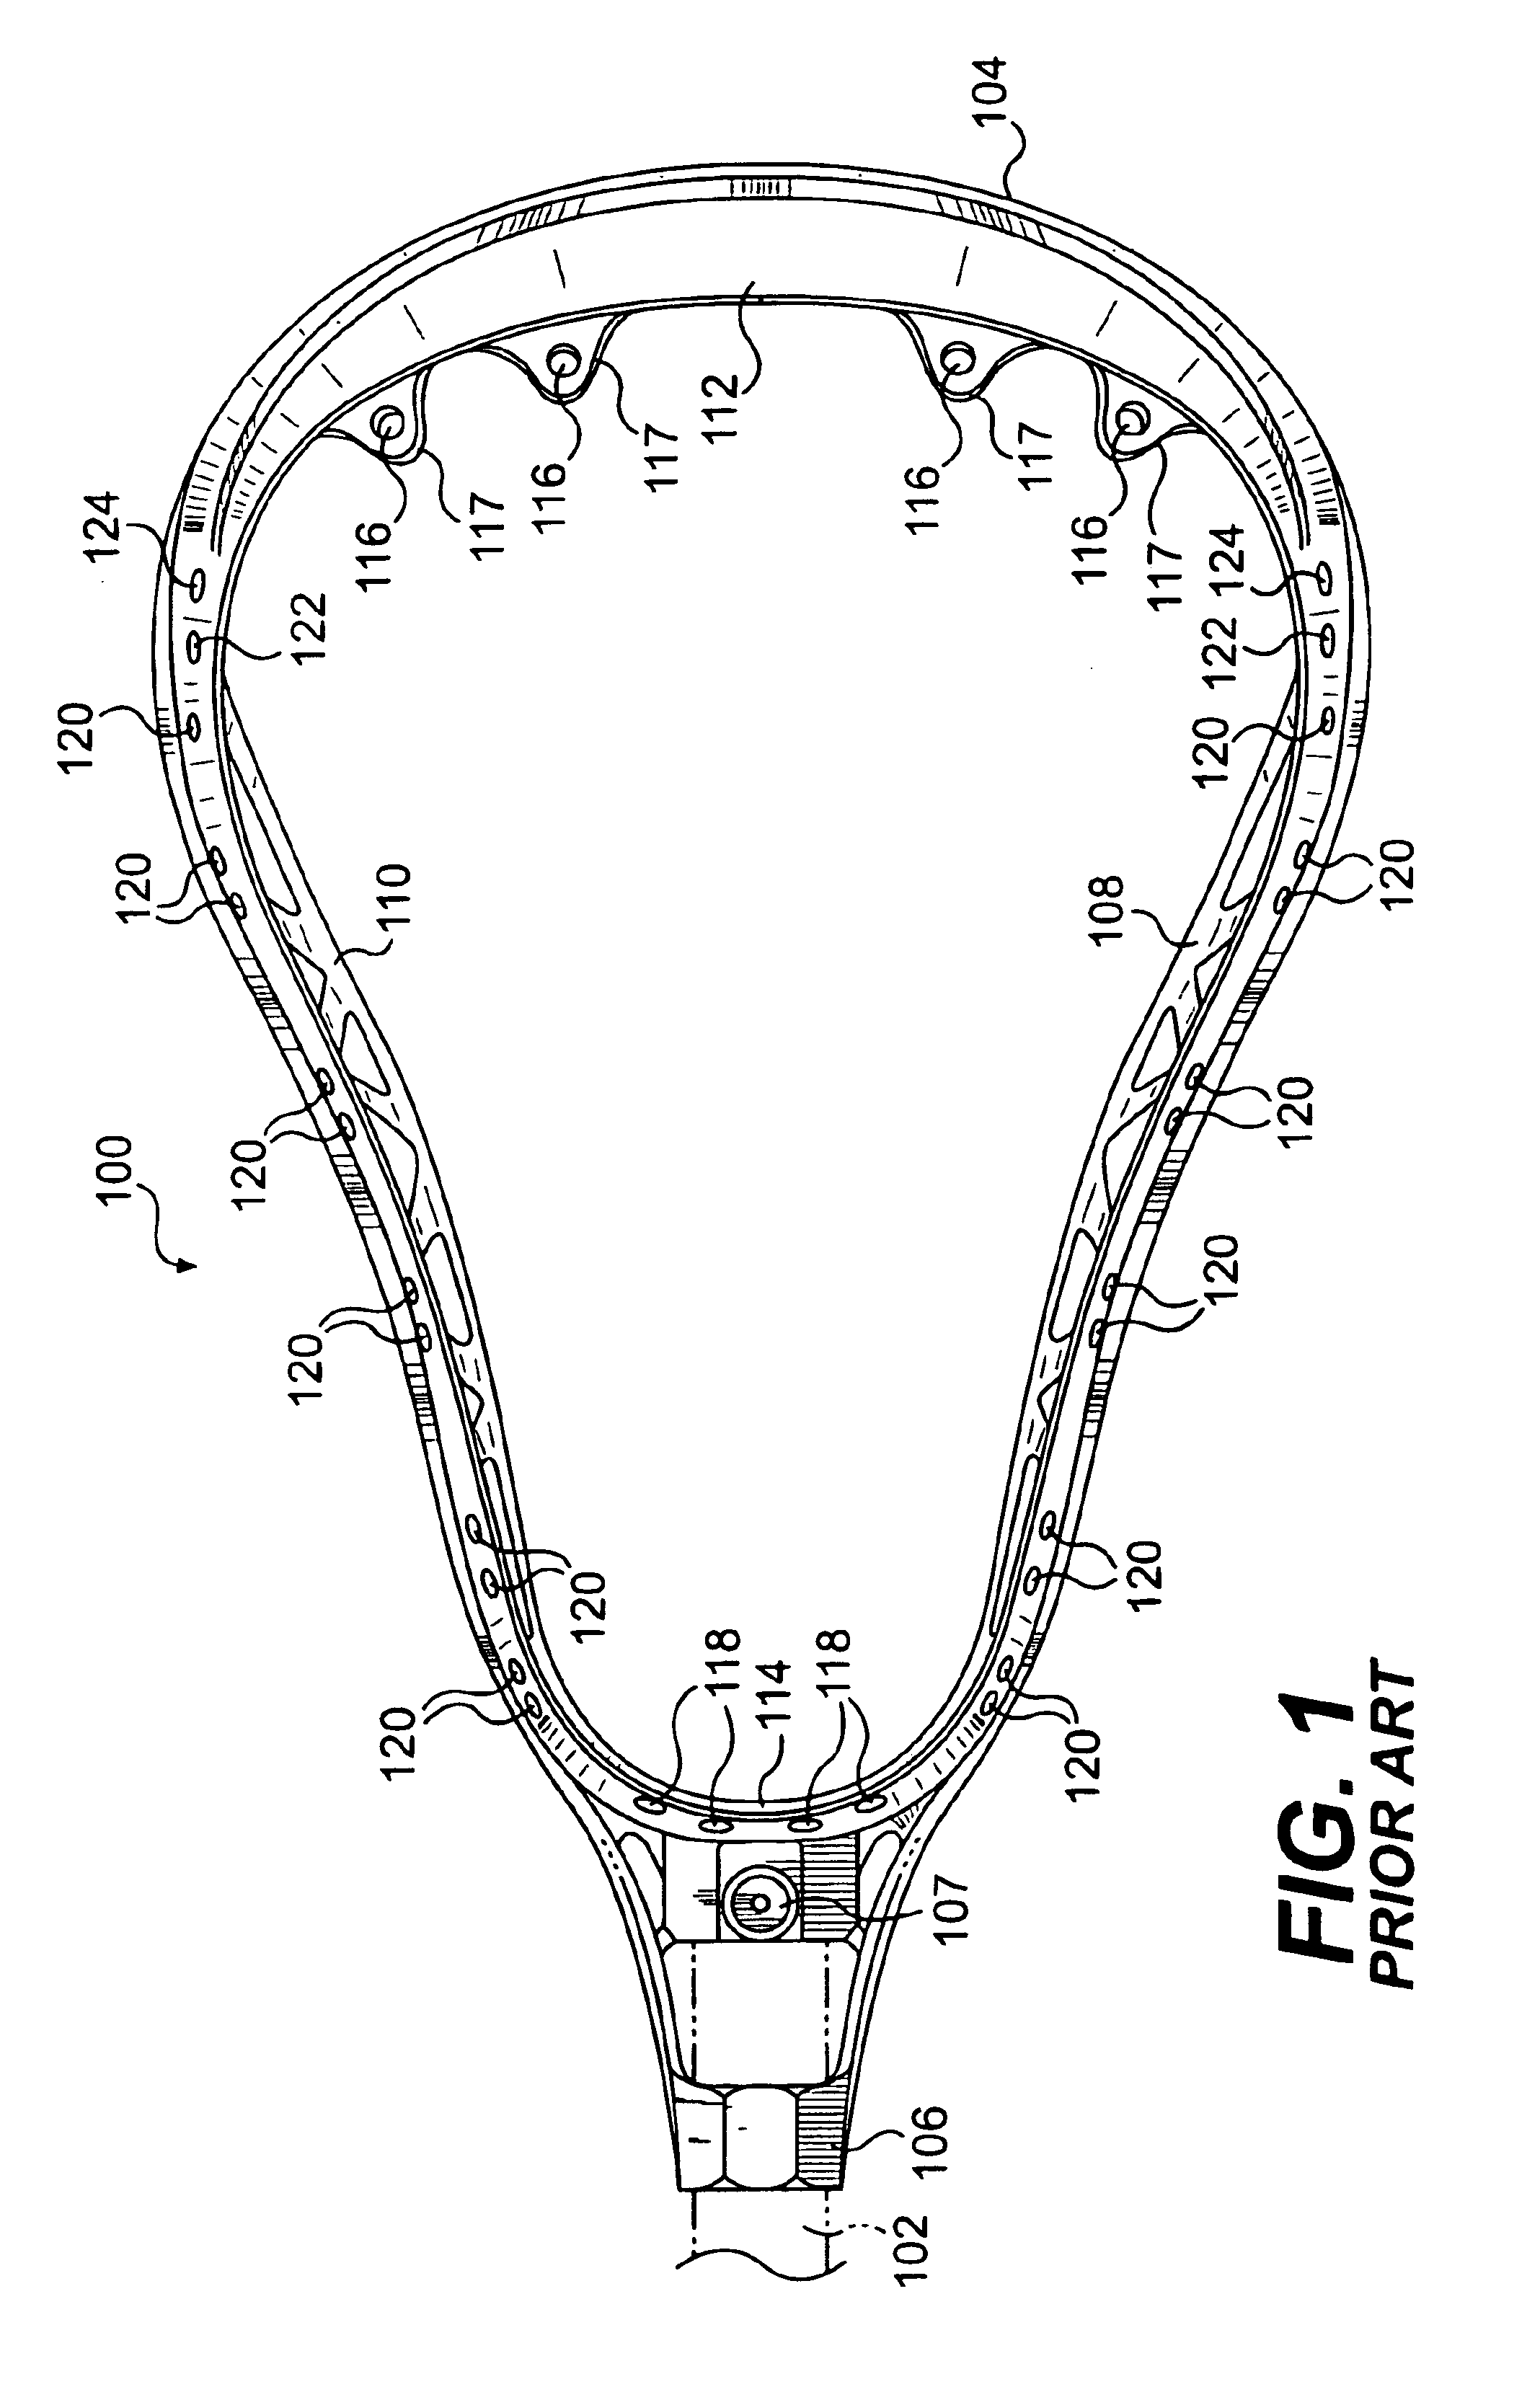 Multi-component lacrosse stick head